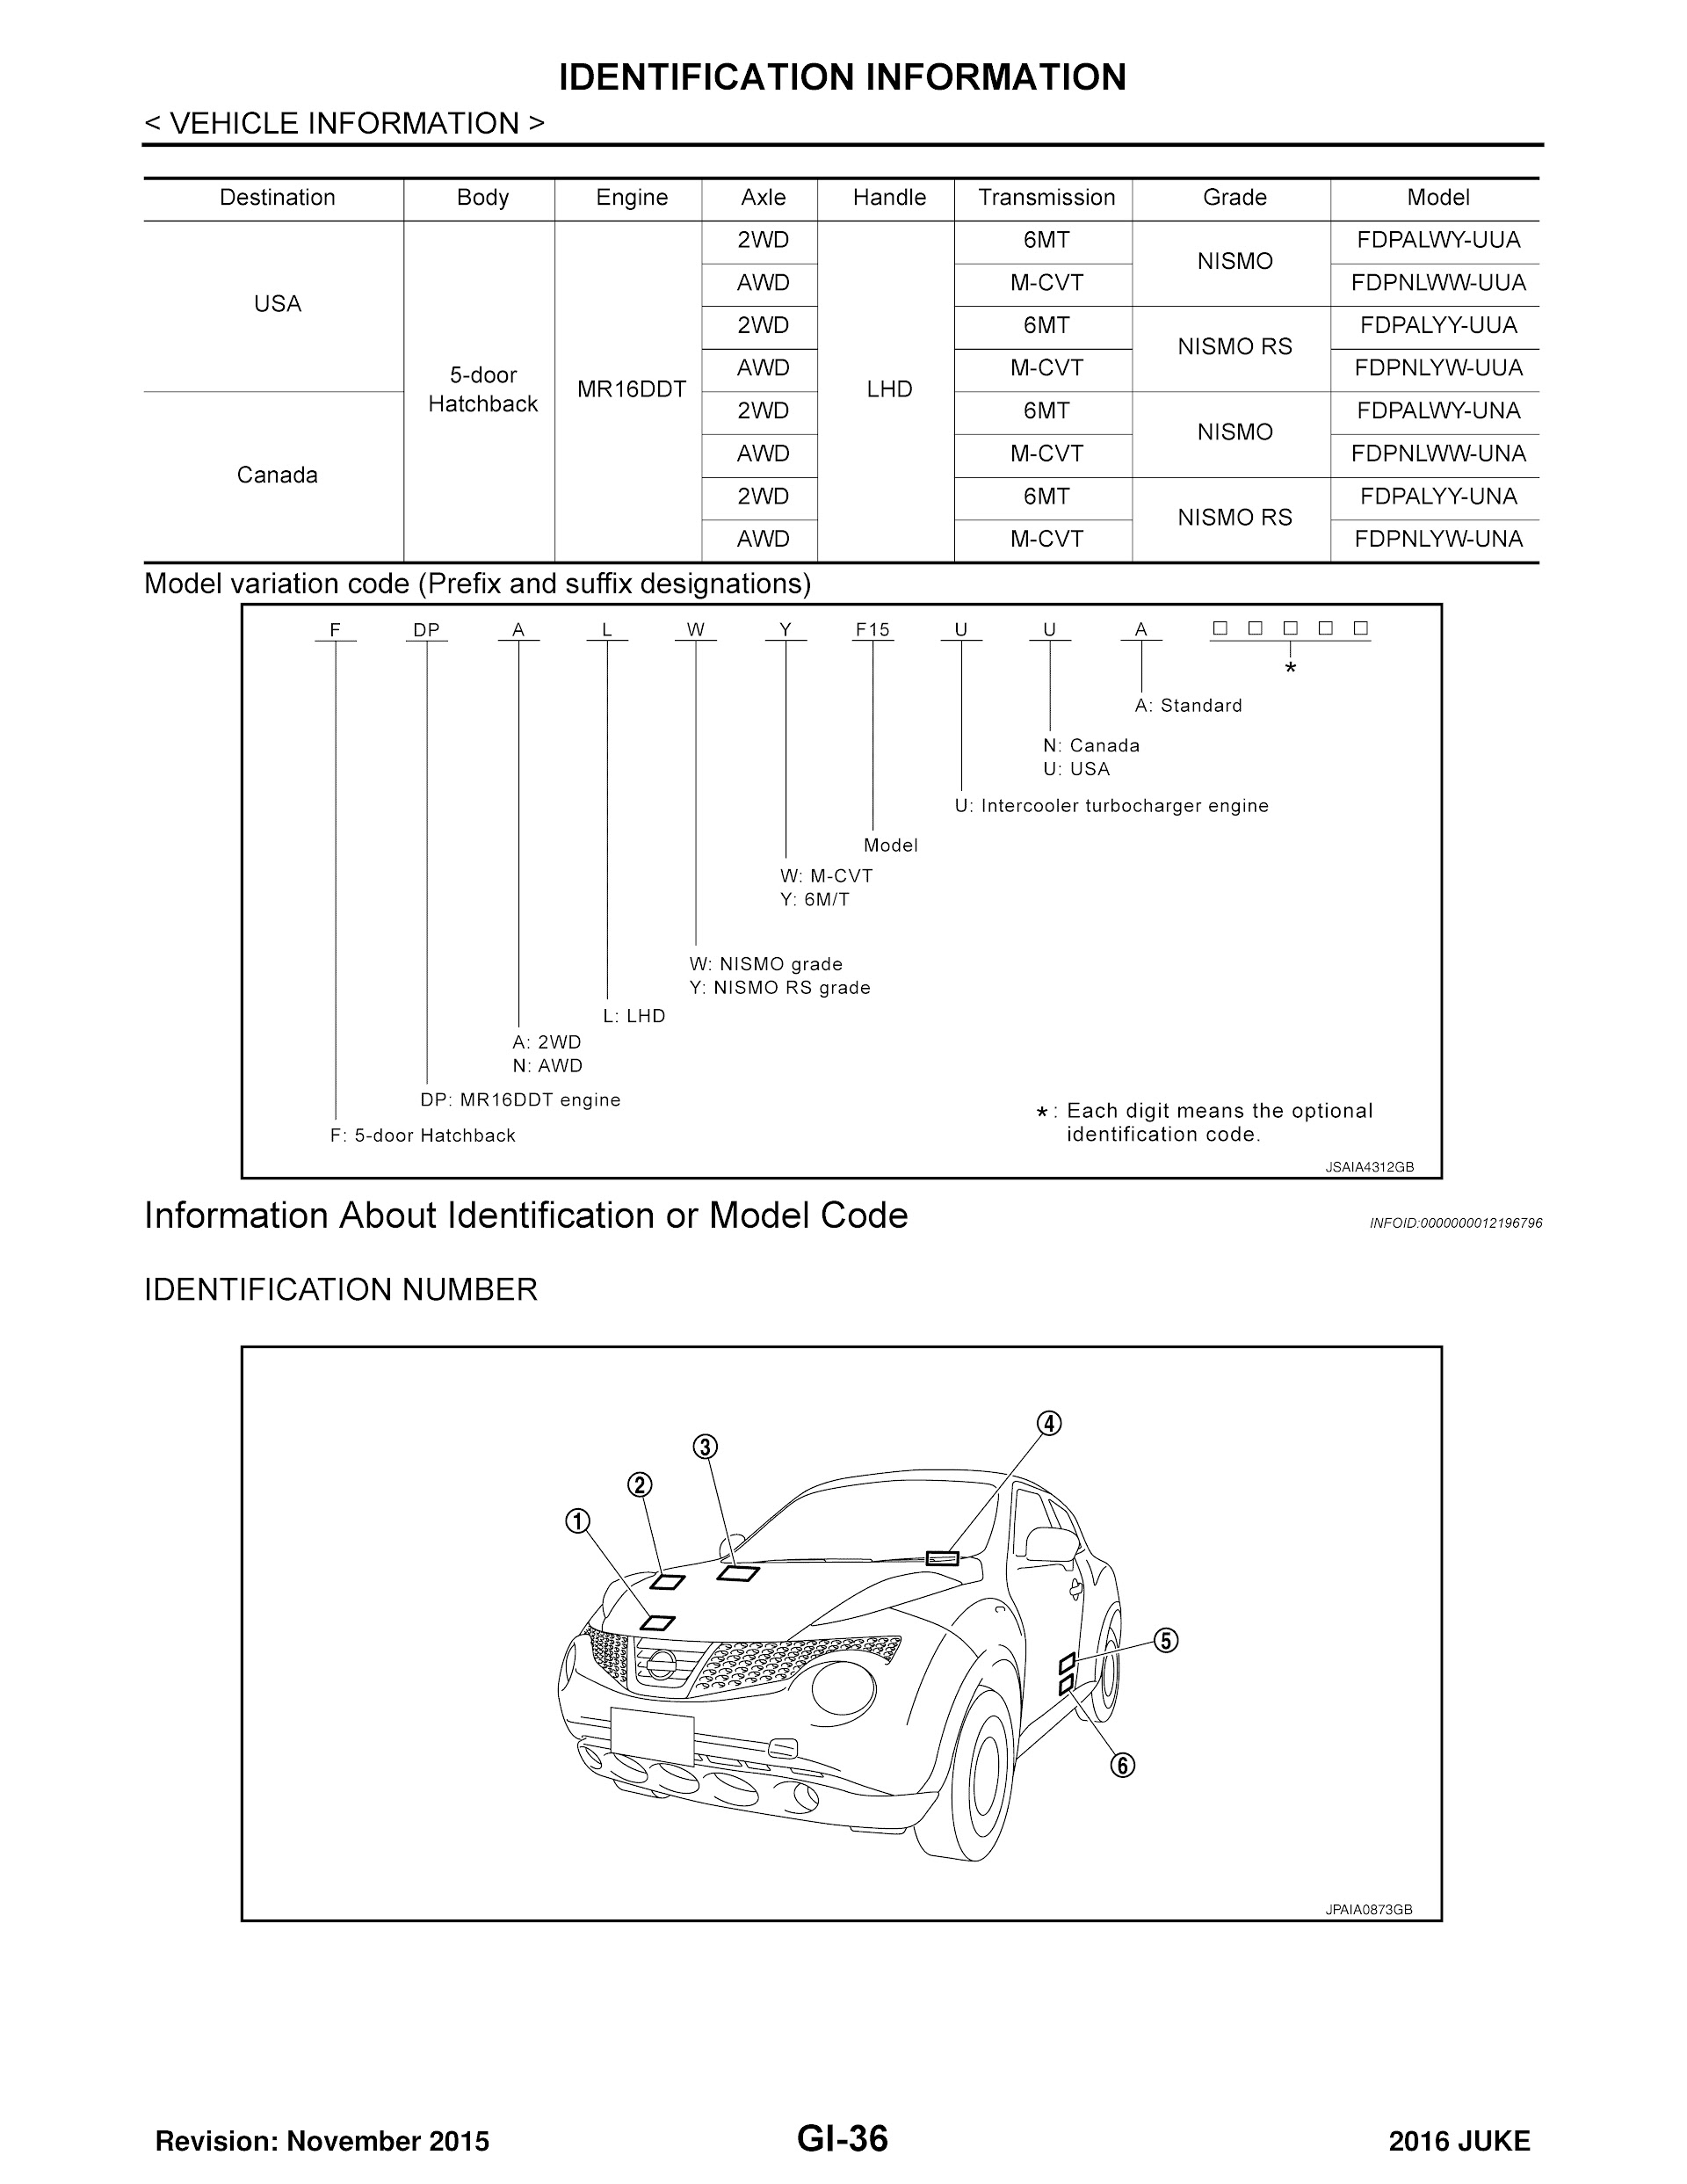 CONTENTS: 2016 Nissan Juke Repair Manual, Vehicle Inofrmation